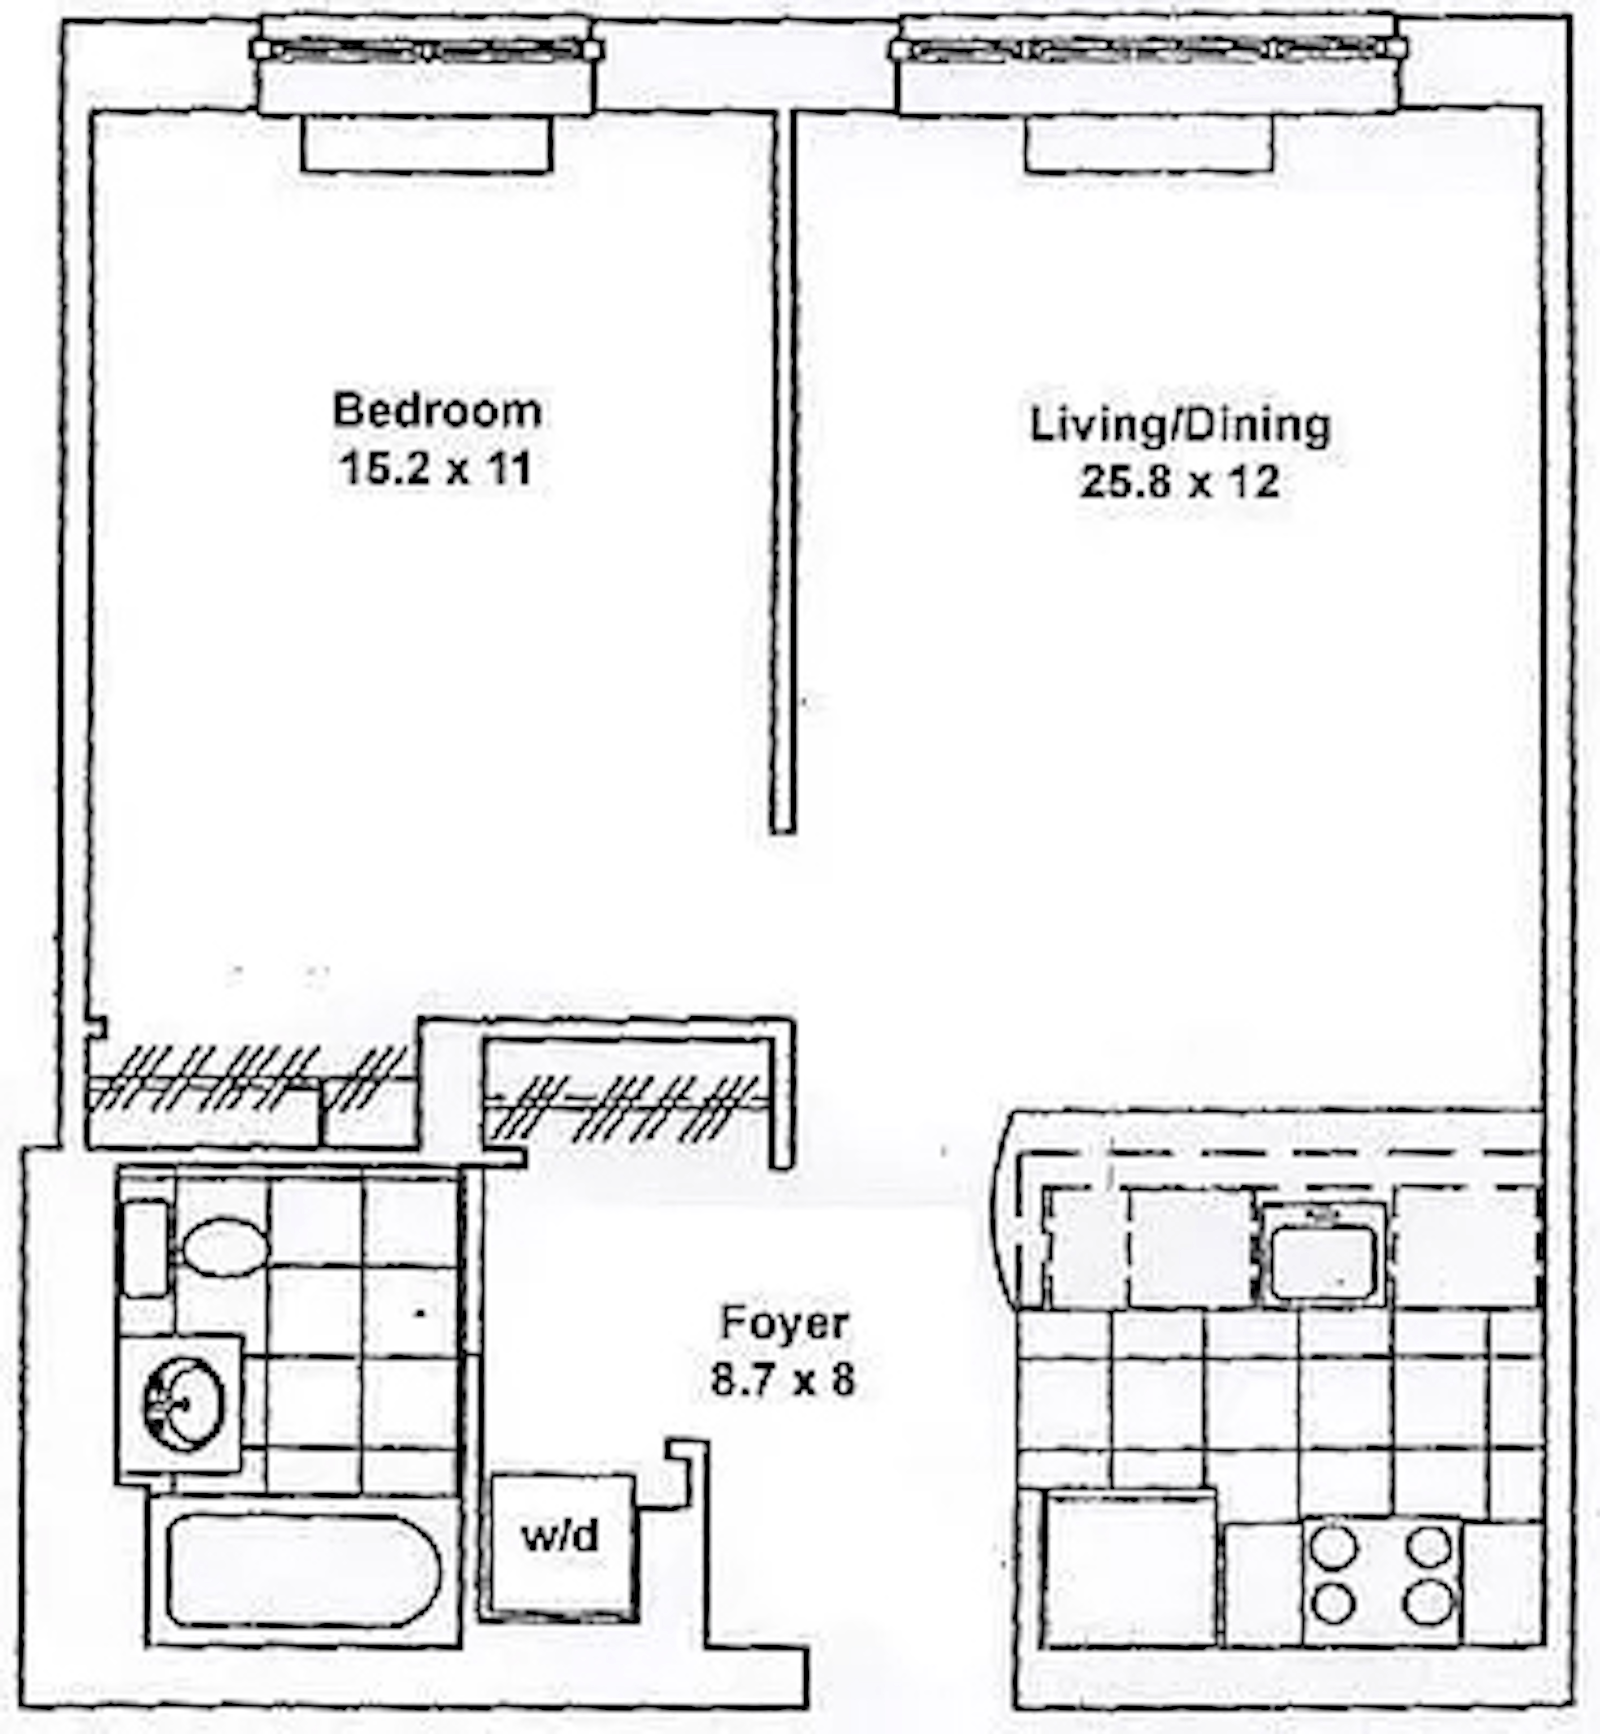 Floorplan for 555 West 23rd Street, N12F